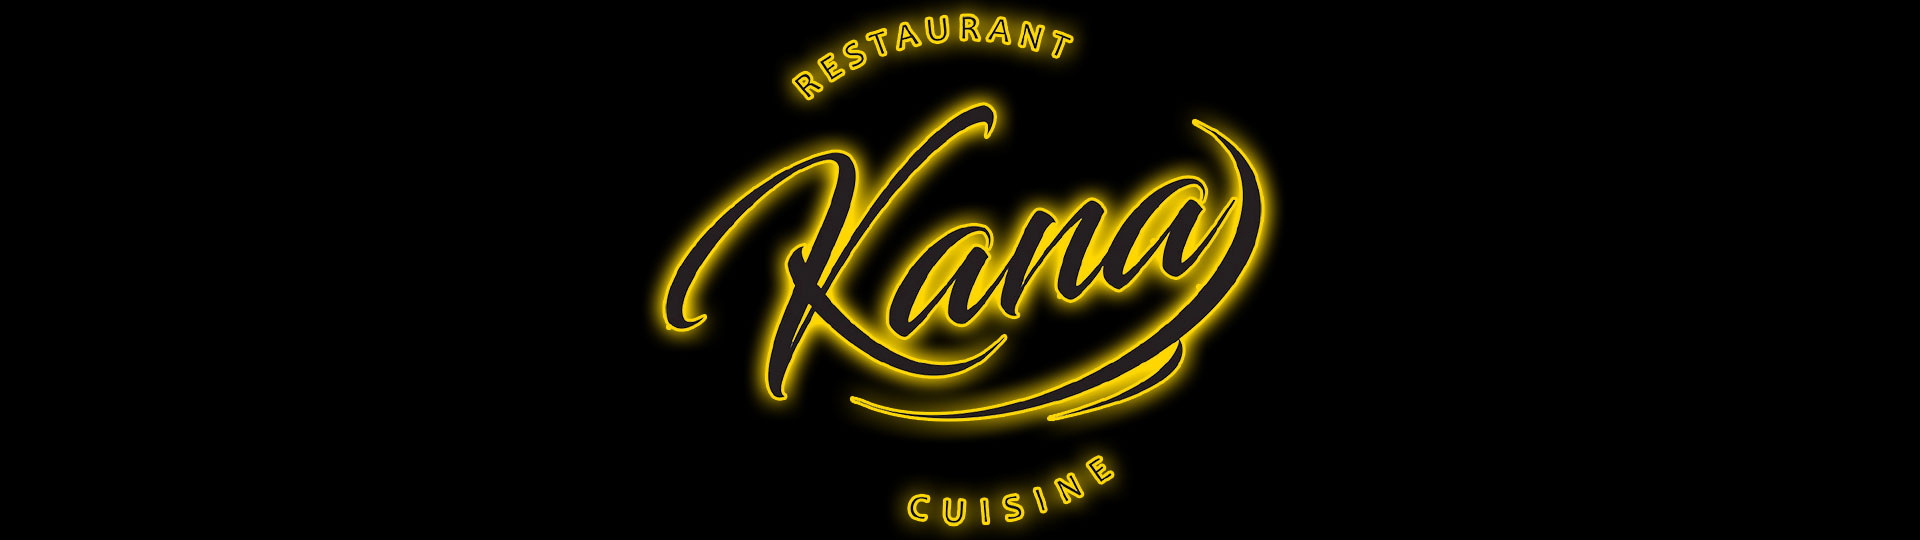 Kana Restaurant